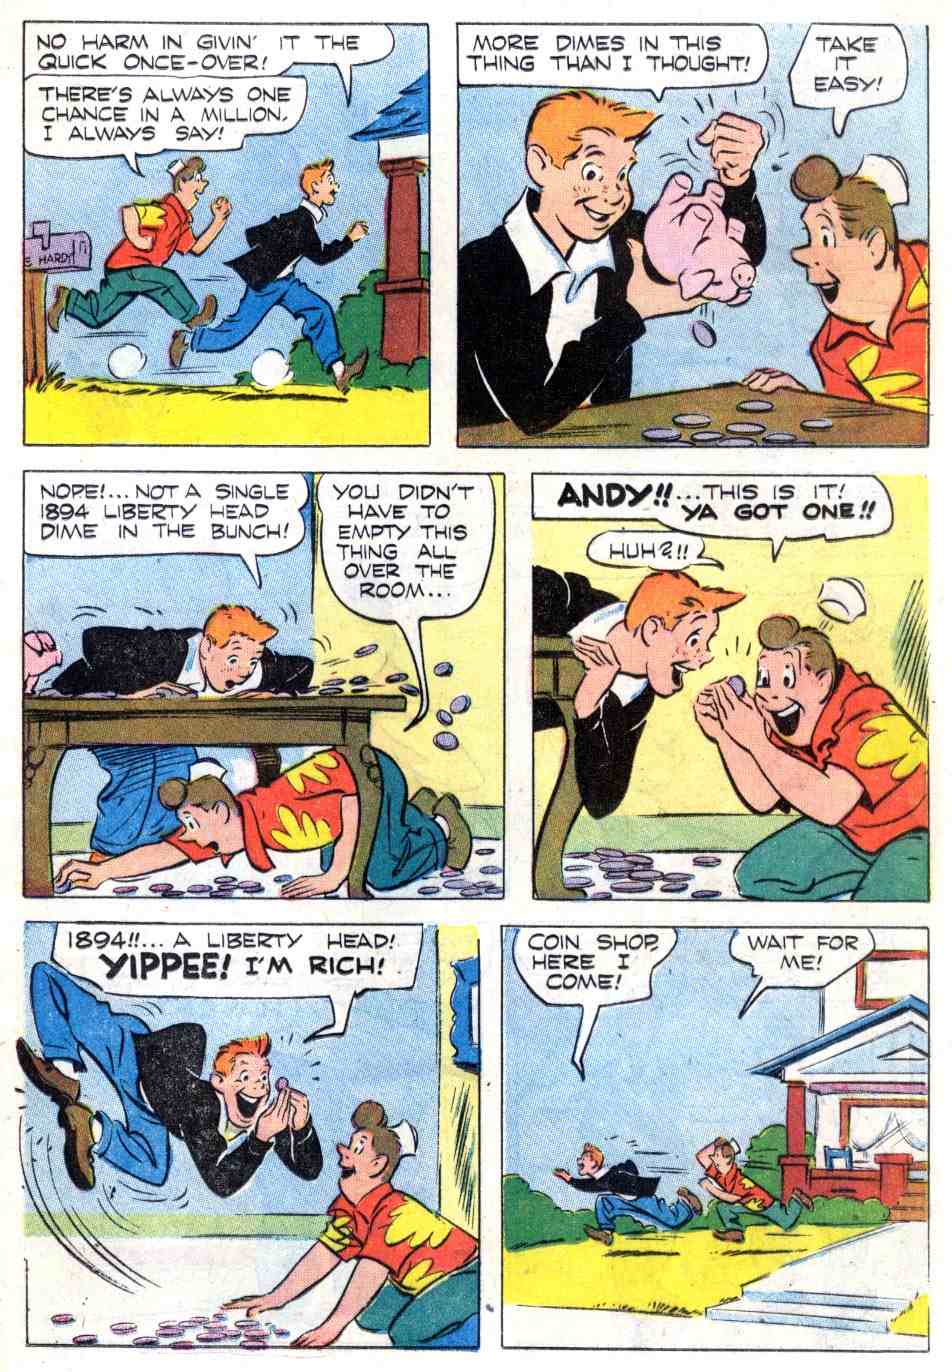 Andy-Hardy-Comic-Strips (25)